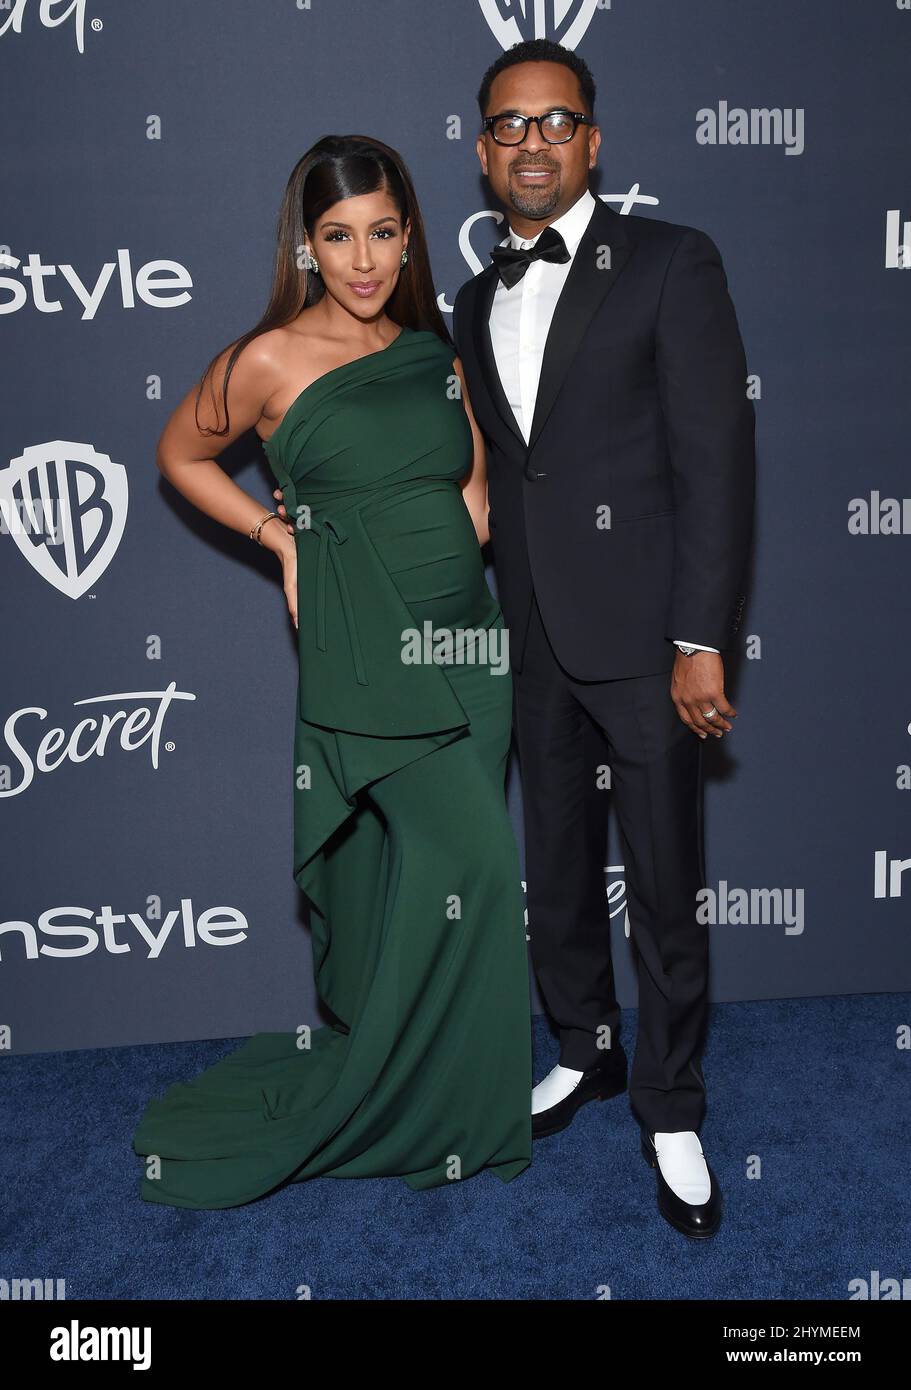 Mike Epps und Kyra Robinson bei der Instyle and Warner Bros Golden Globes After Party, die am 5. Januar 2020 im Beverly Hilton Hotel in Beverly Hills, Los Angeles, stattfand. Stockfoto